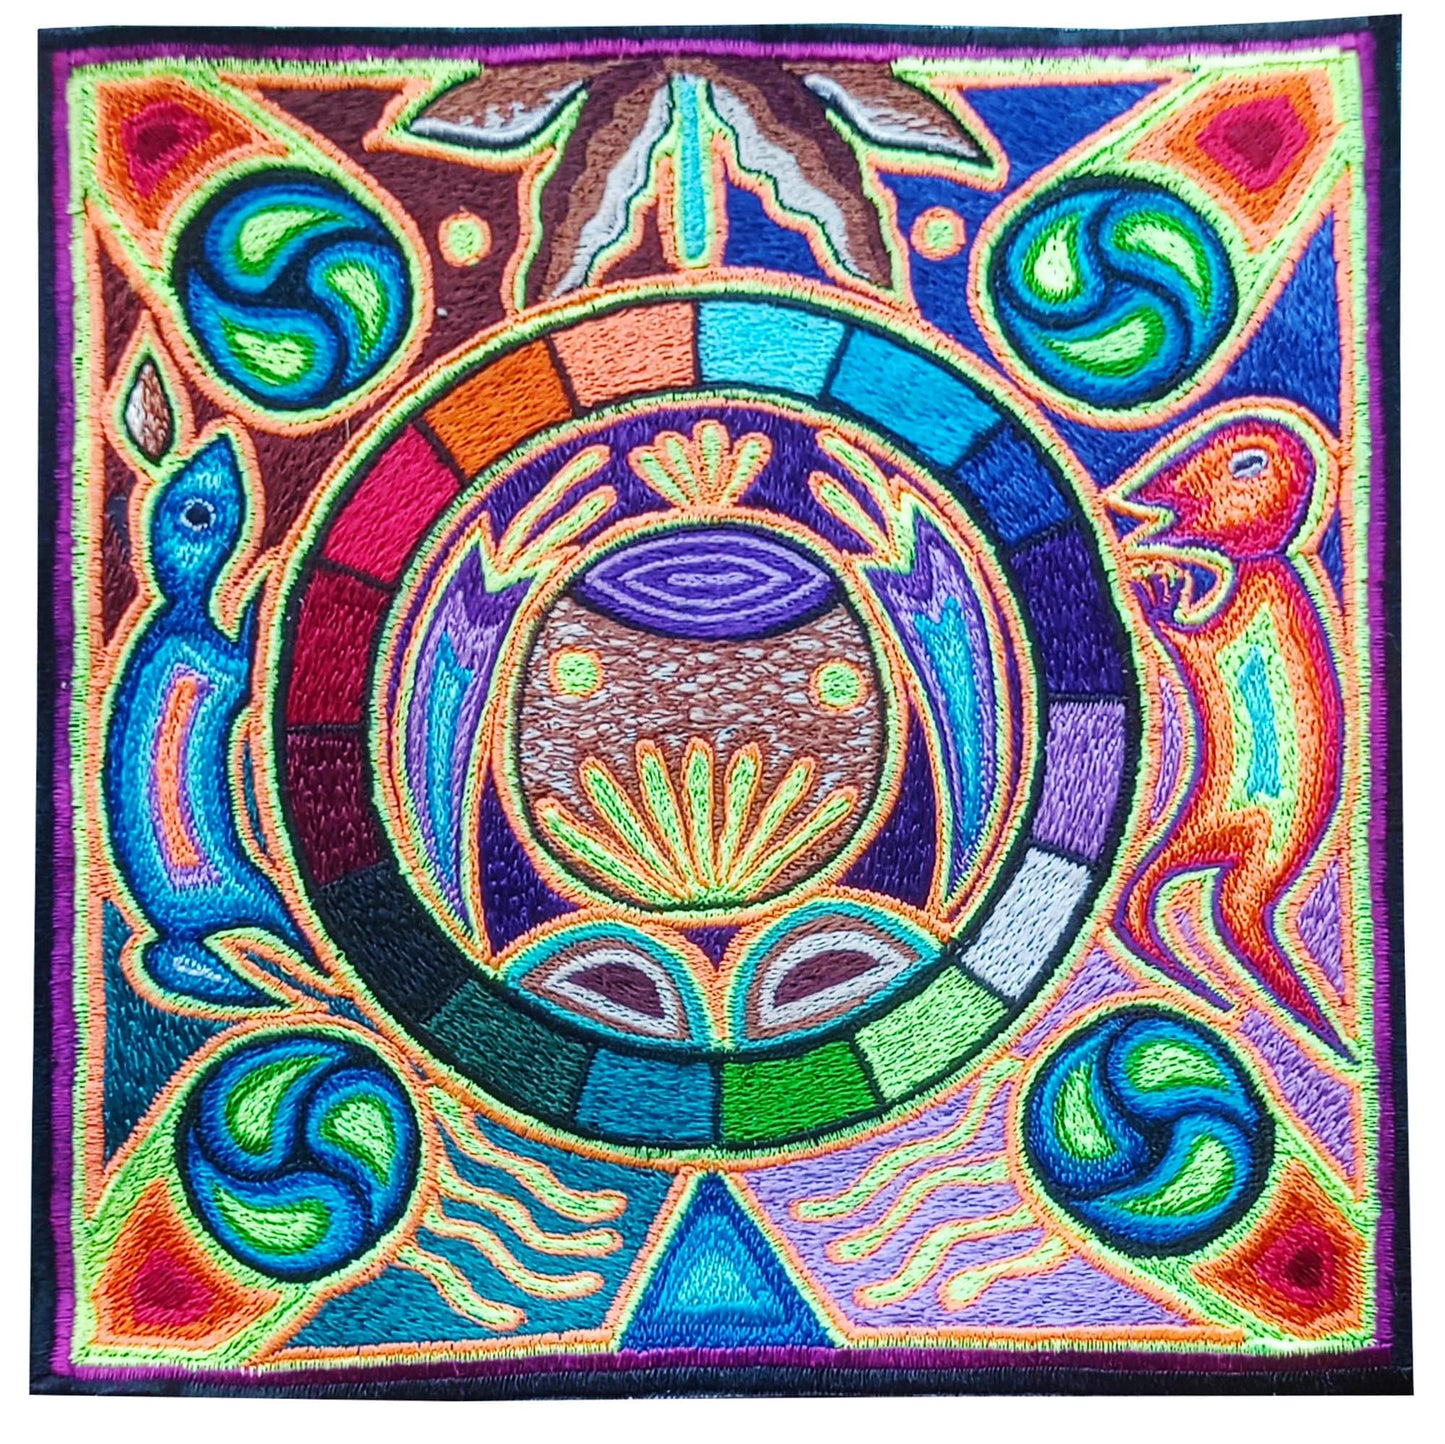 Huichol Peyote Medicine embroidery art shaman artwork mescaline blacklight glowing magic cactus indigene decoration UV active shining